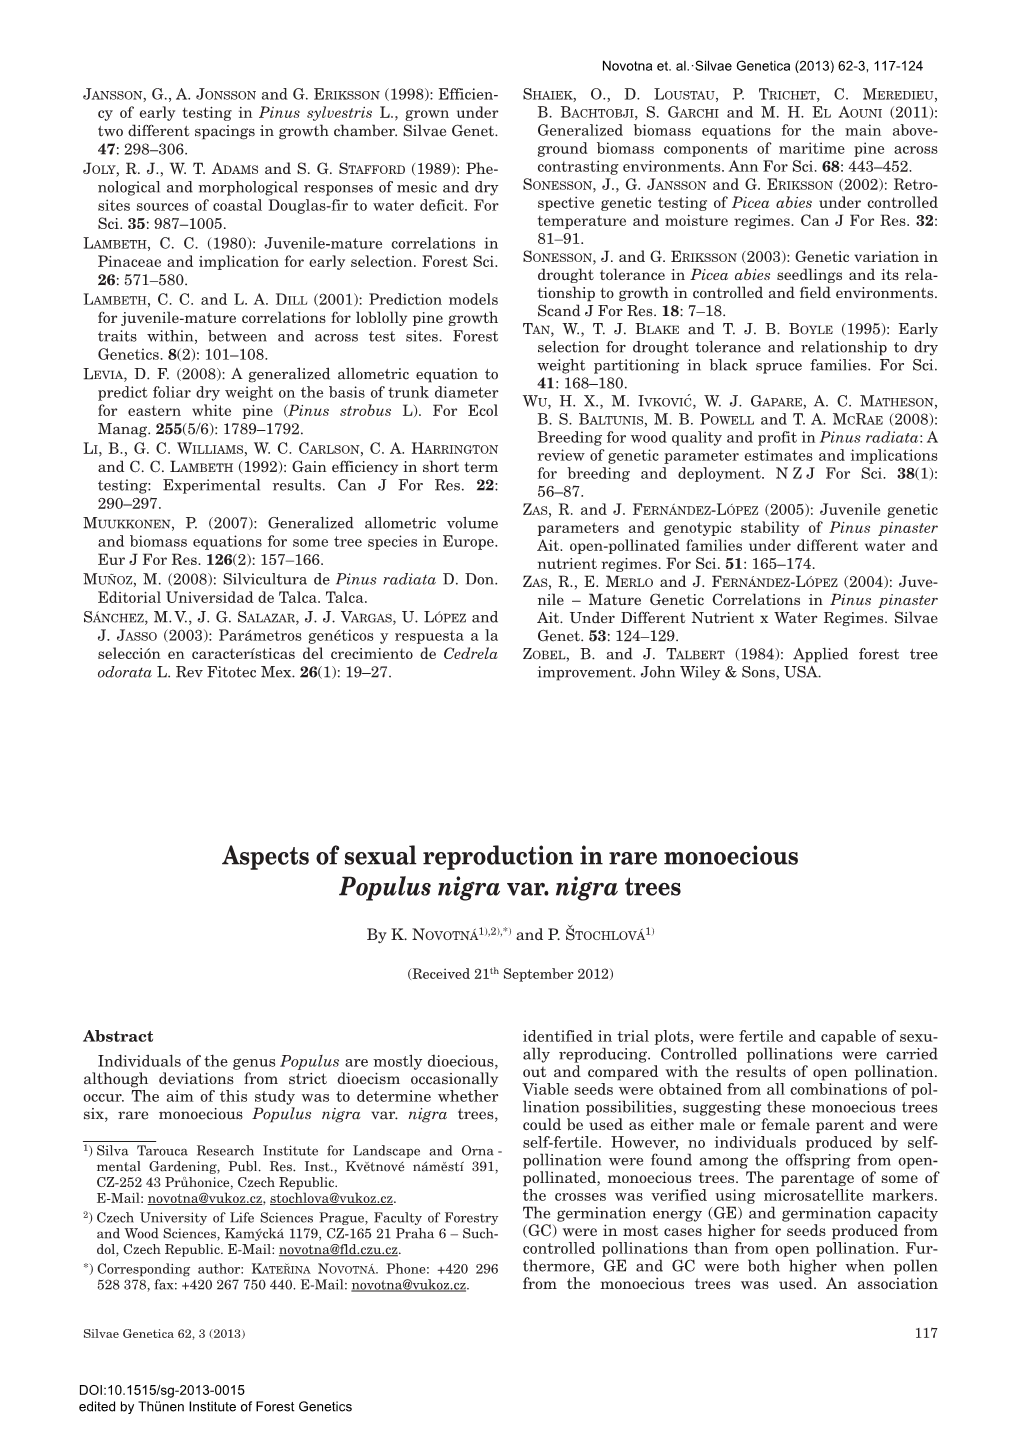 Aspects of Sexual Reproduction in Rare Monoecious Populus Nigra Var